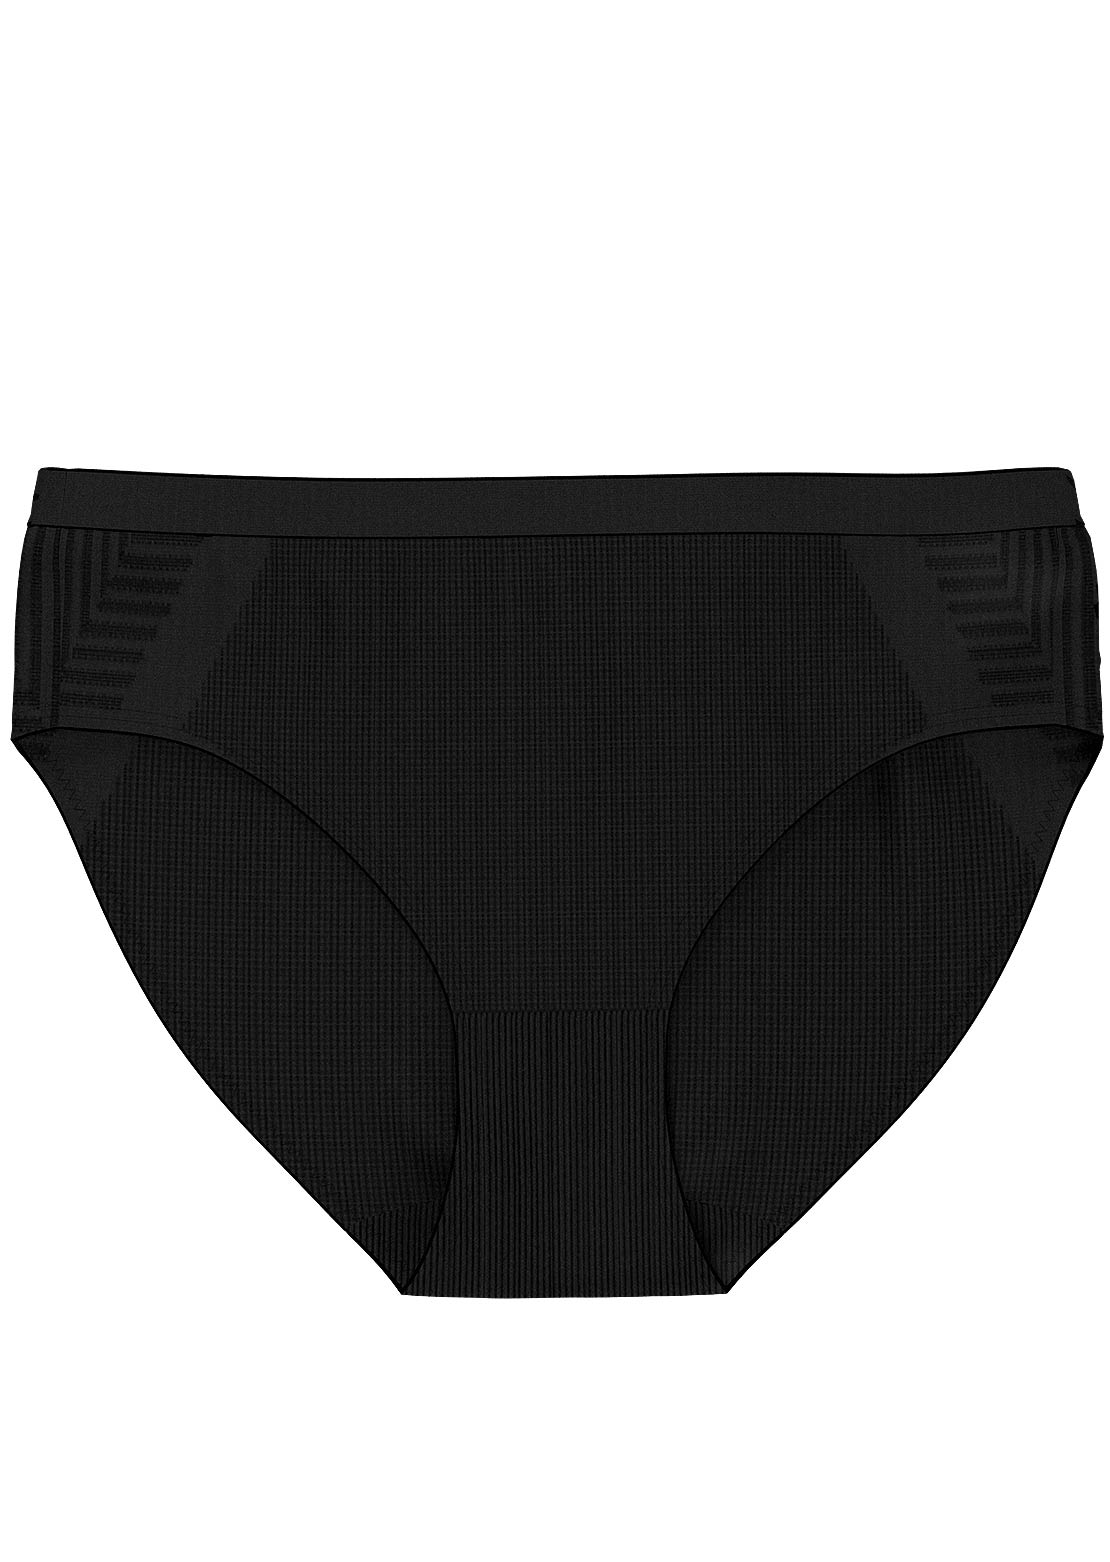 Smartwool Merino Sport Seamless Hipster Underwear - Women's